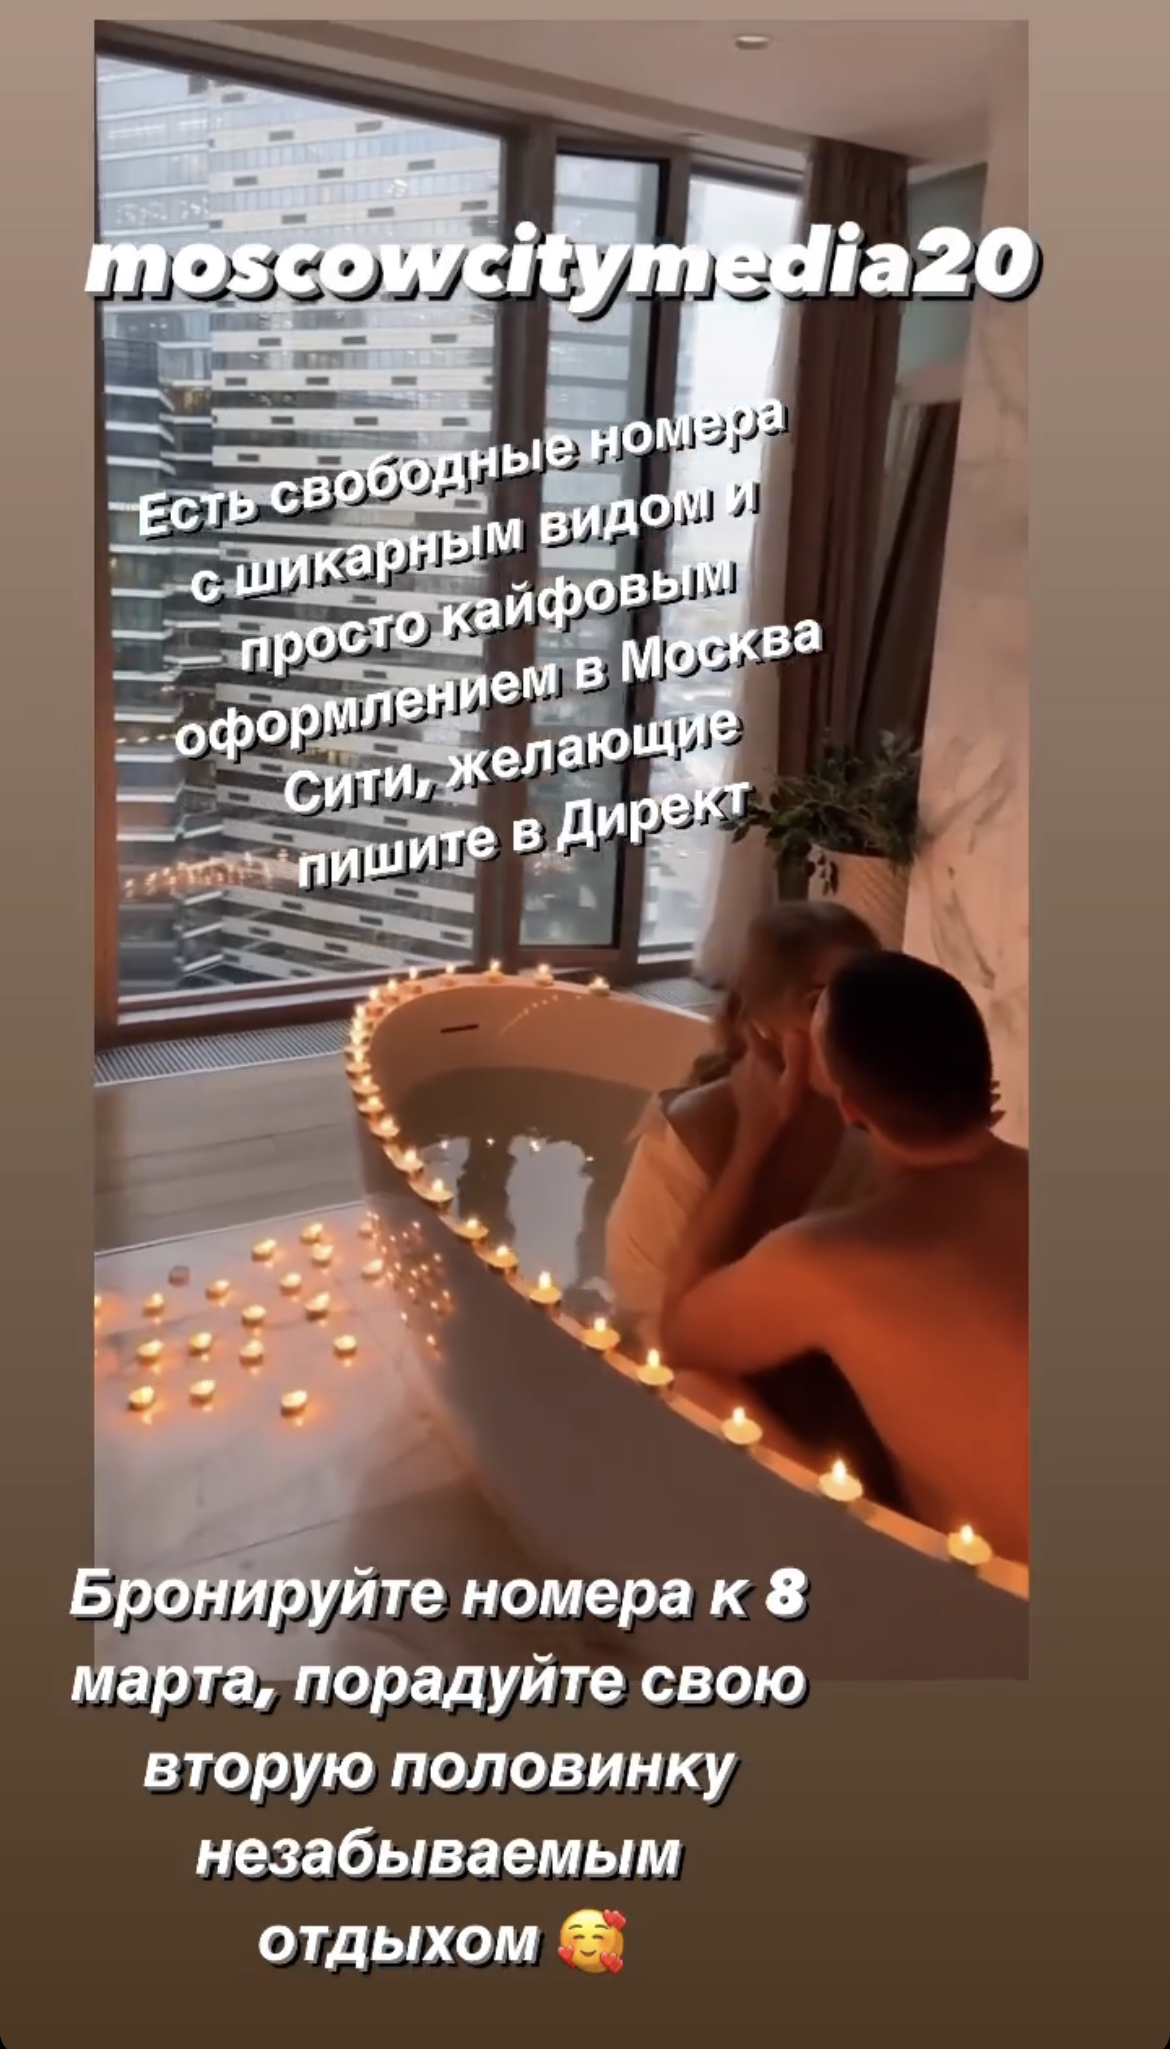 Звоните :89647777502
Instagram:Moscowcitymedia20